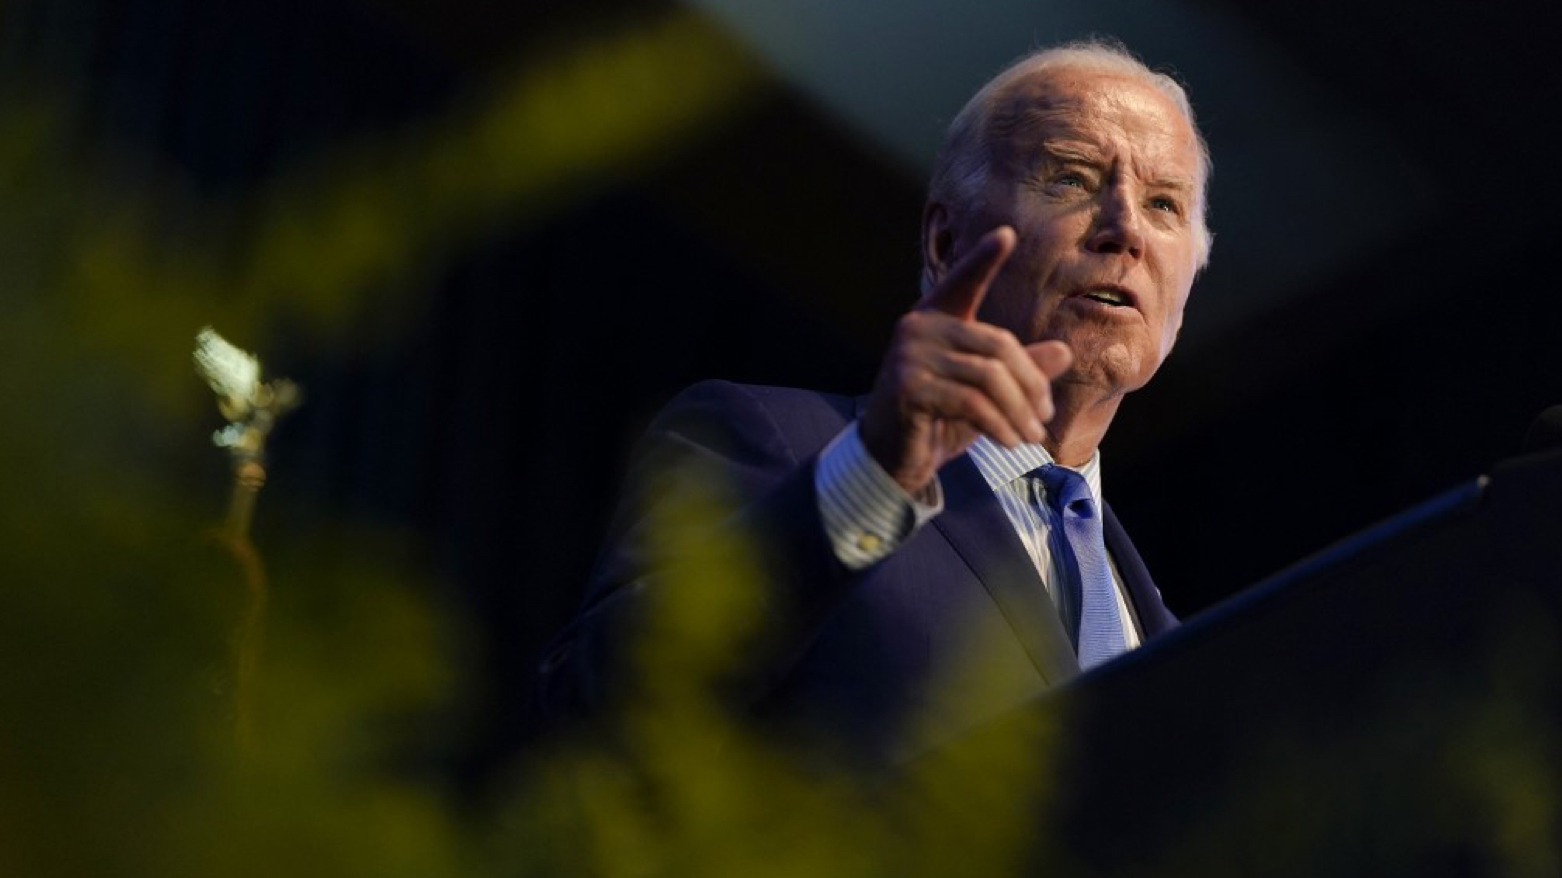 Biden vows US shall respond after troops killed in Jordan